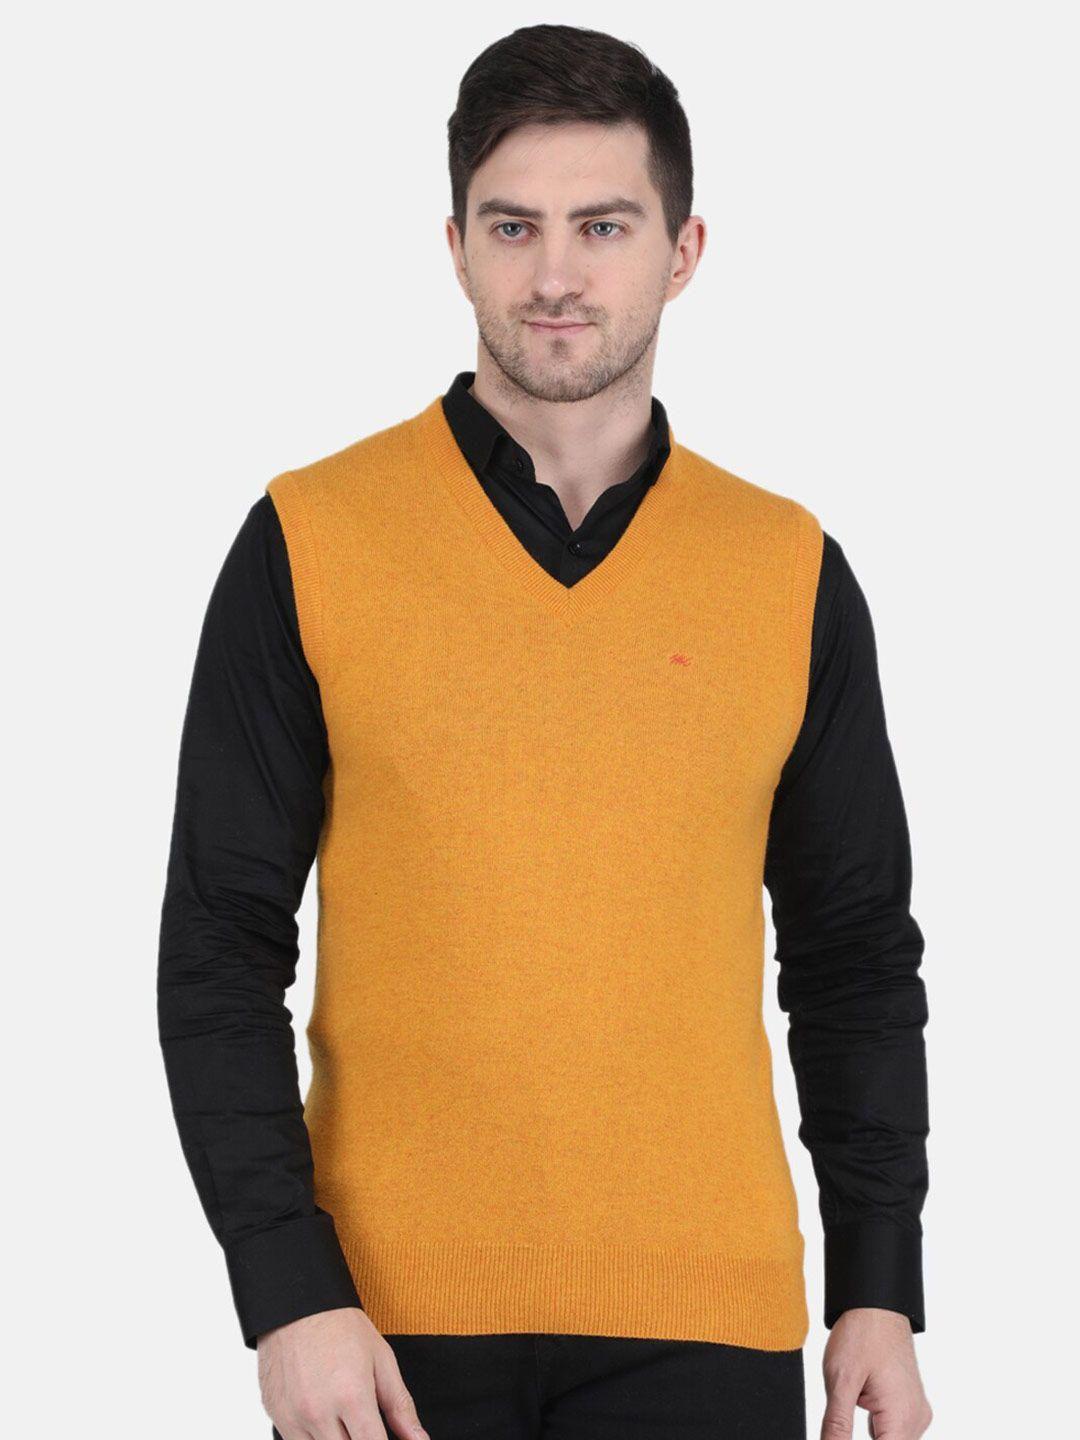 monte carlo men woolen sweater vest